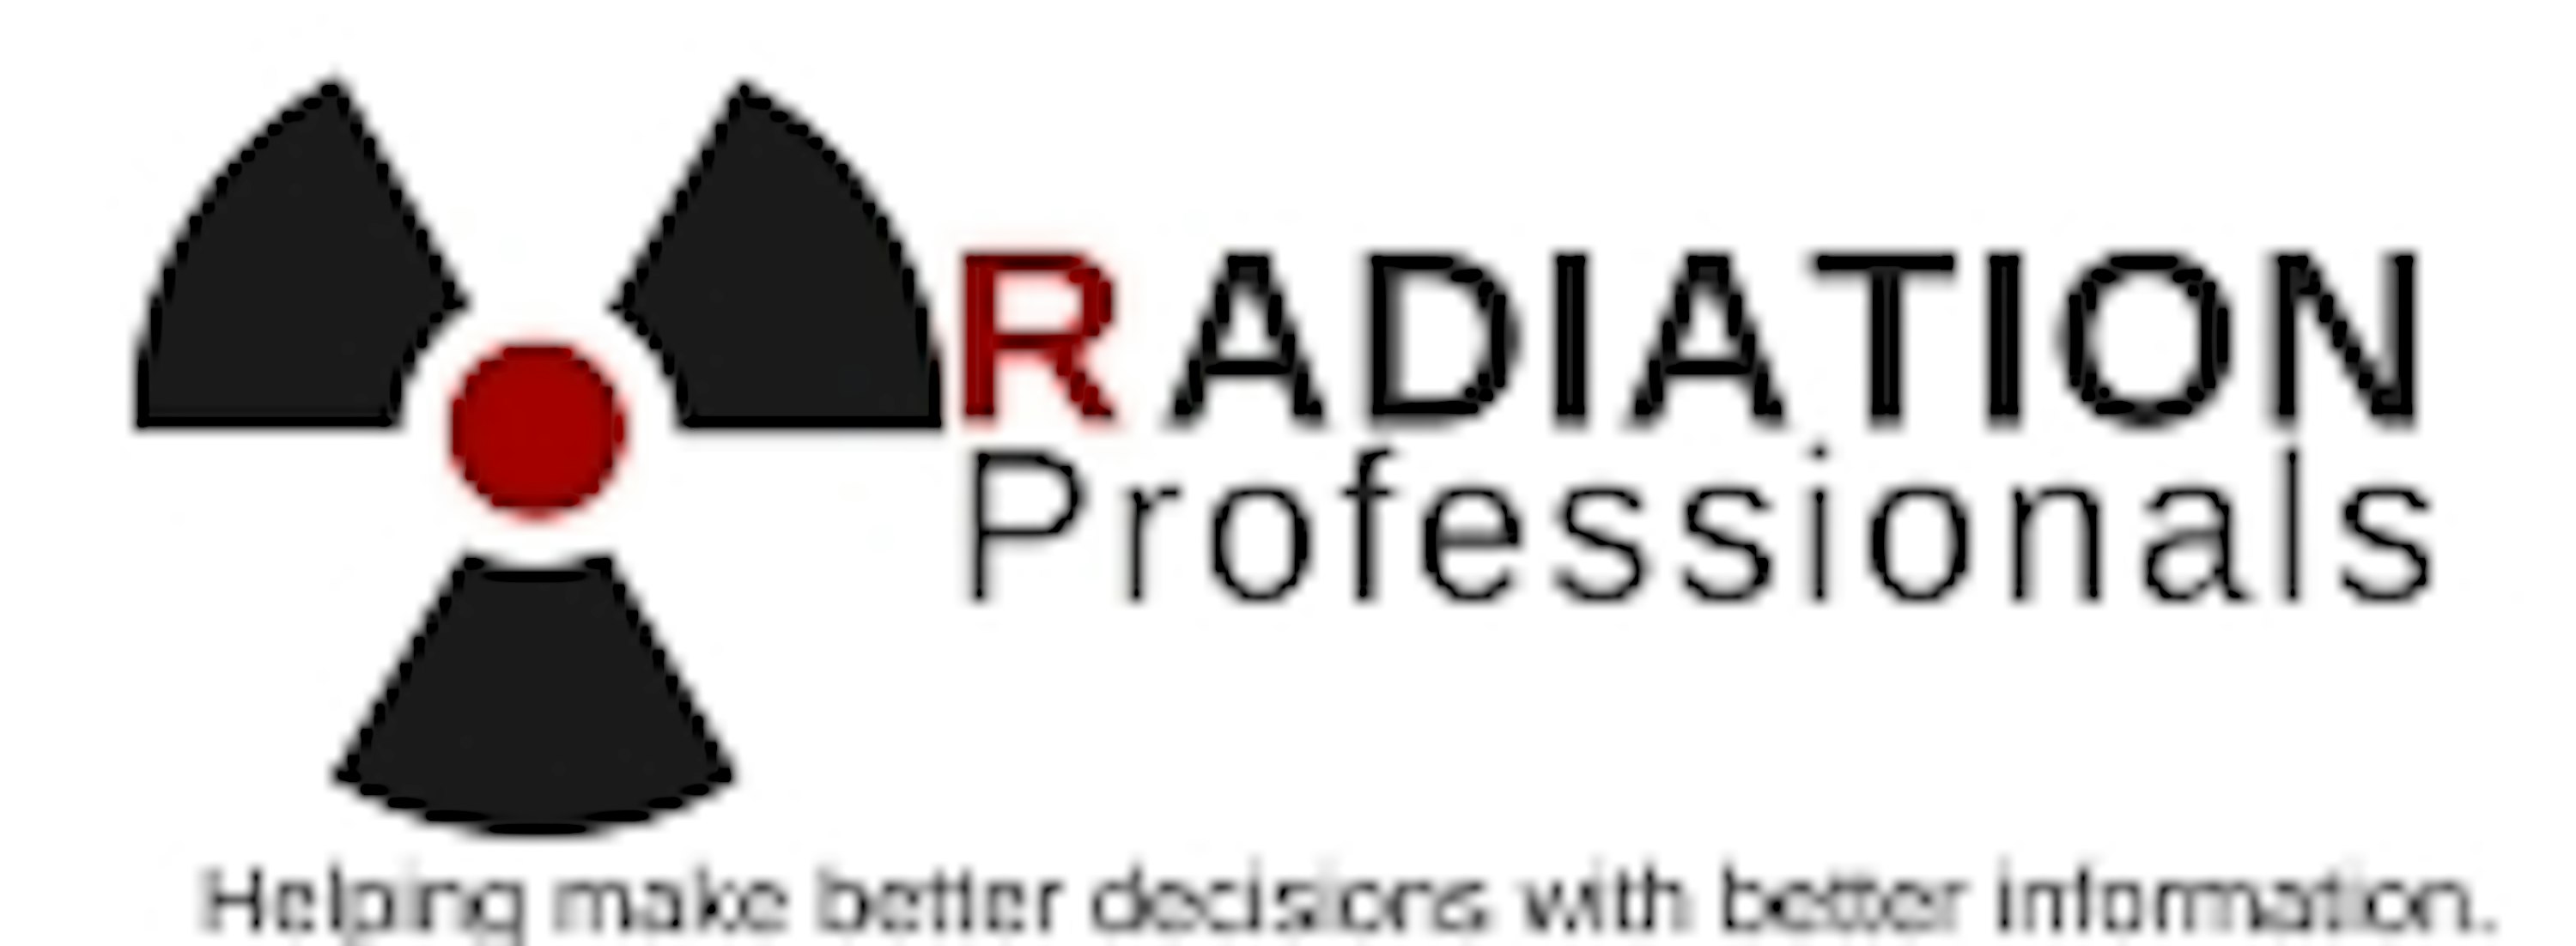 Radiation Professionals Australia - Podcast